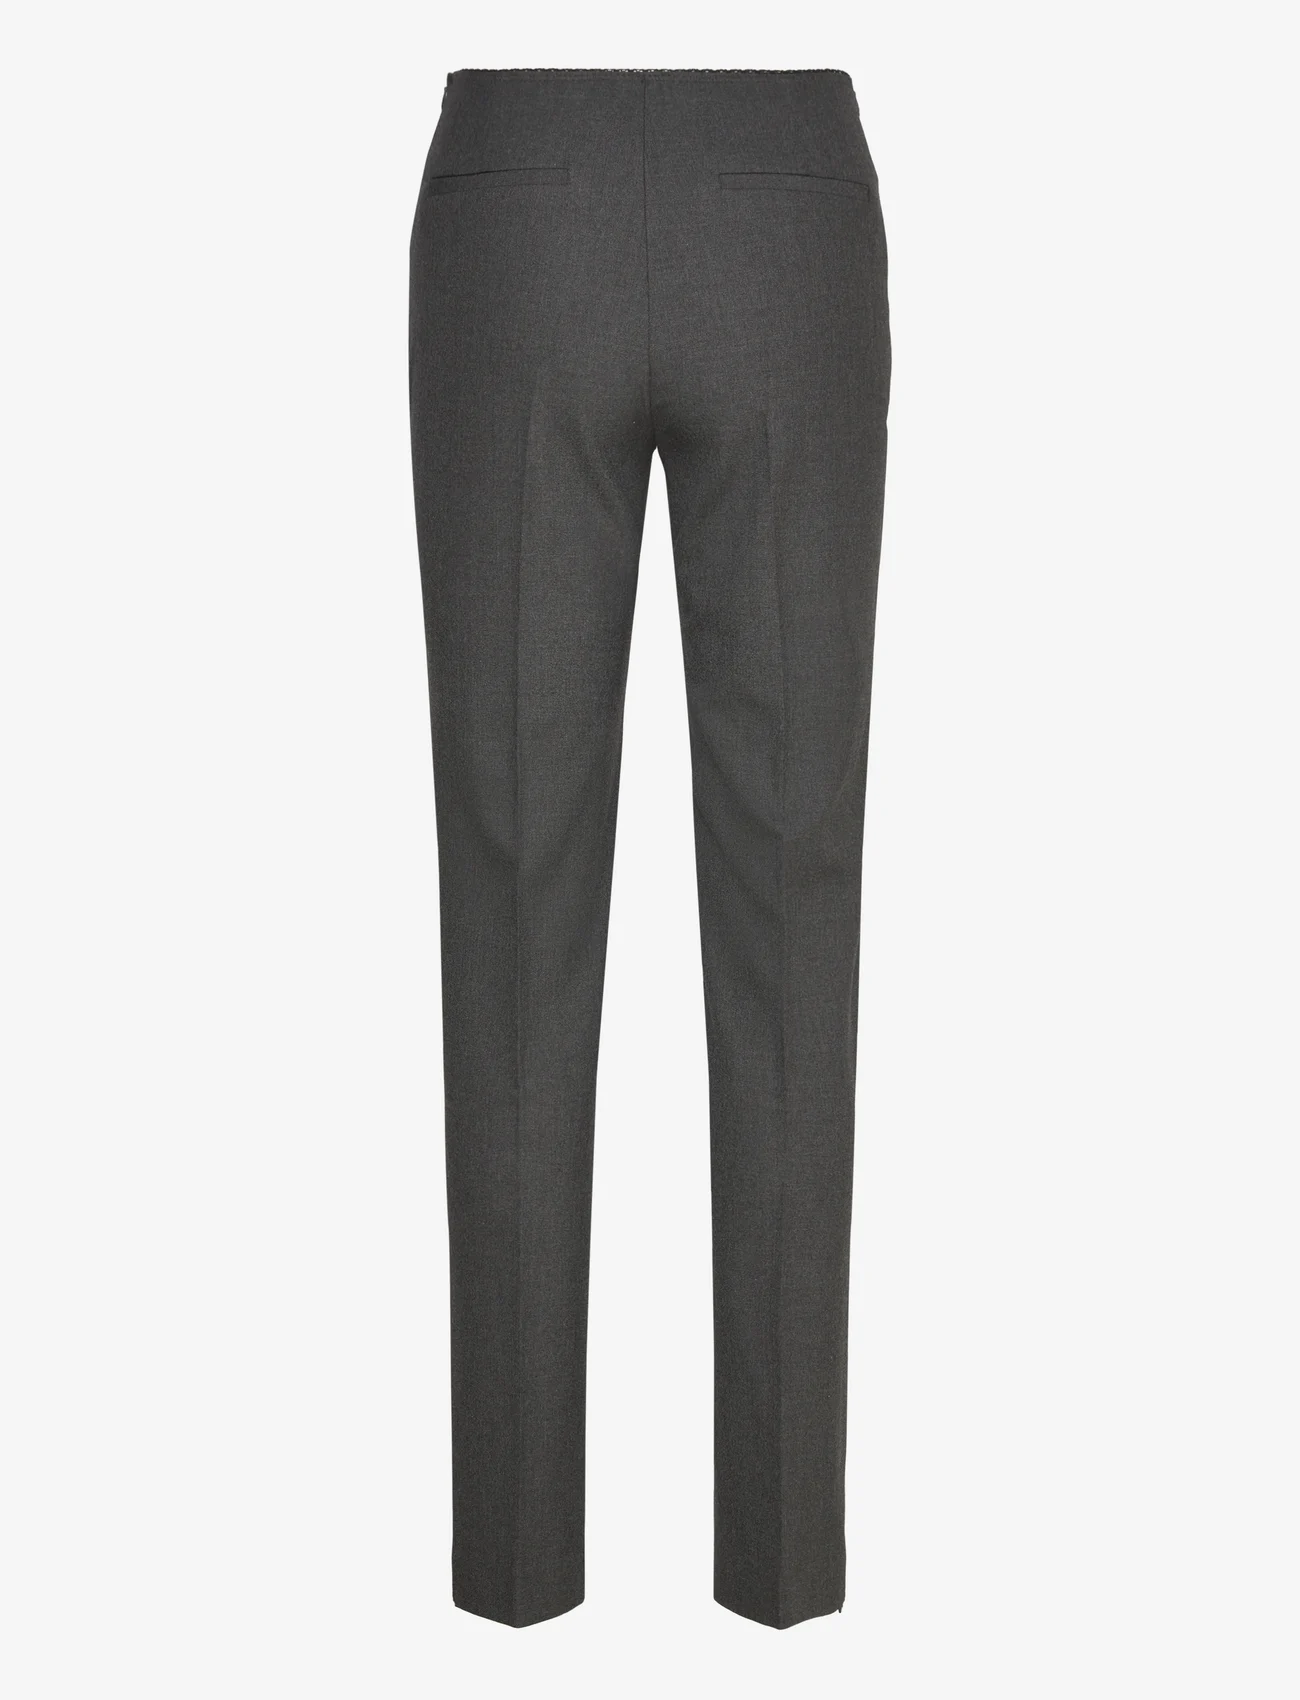 Mango - Pants bottom side zipper - puvunhousut - lt pastel grey - 1